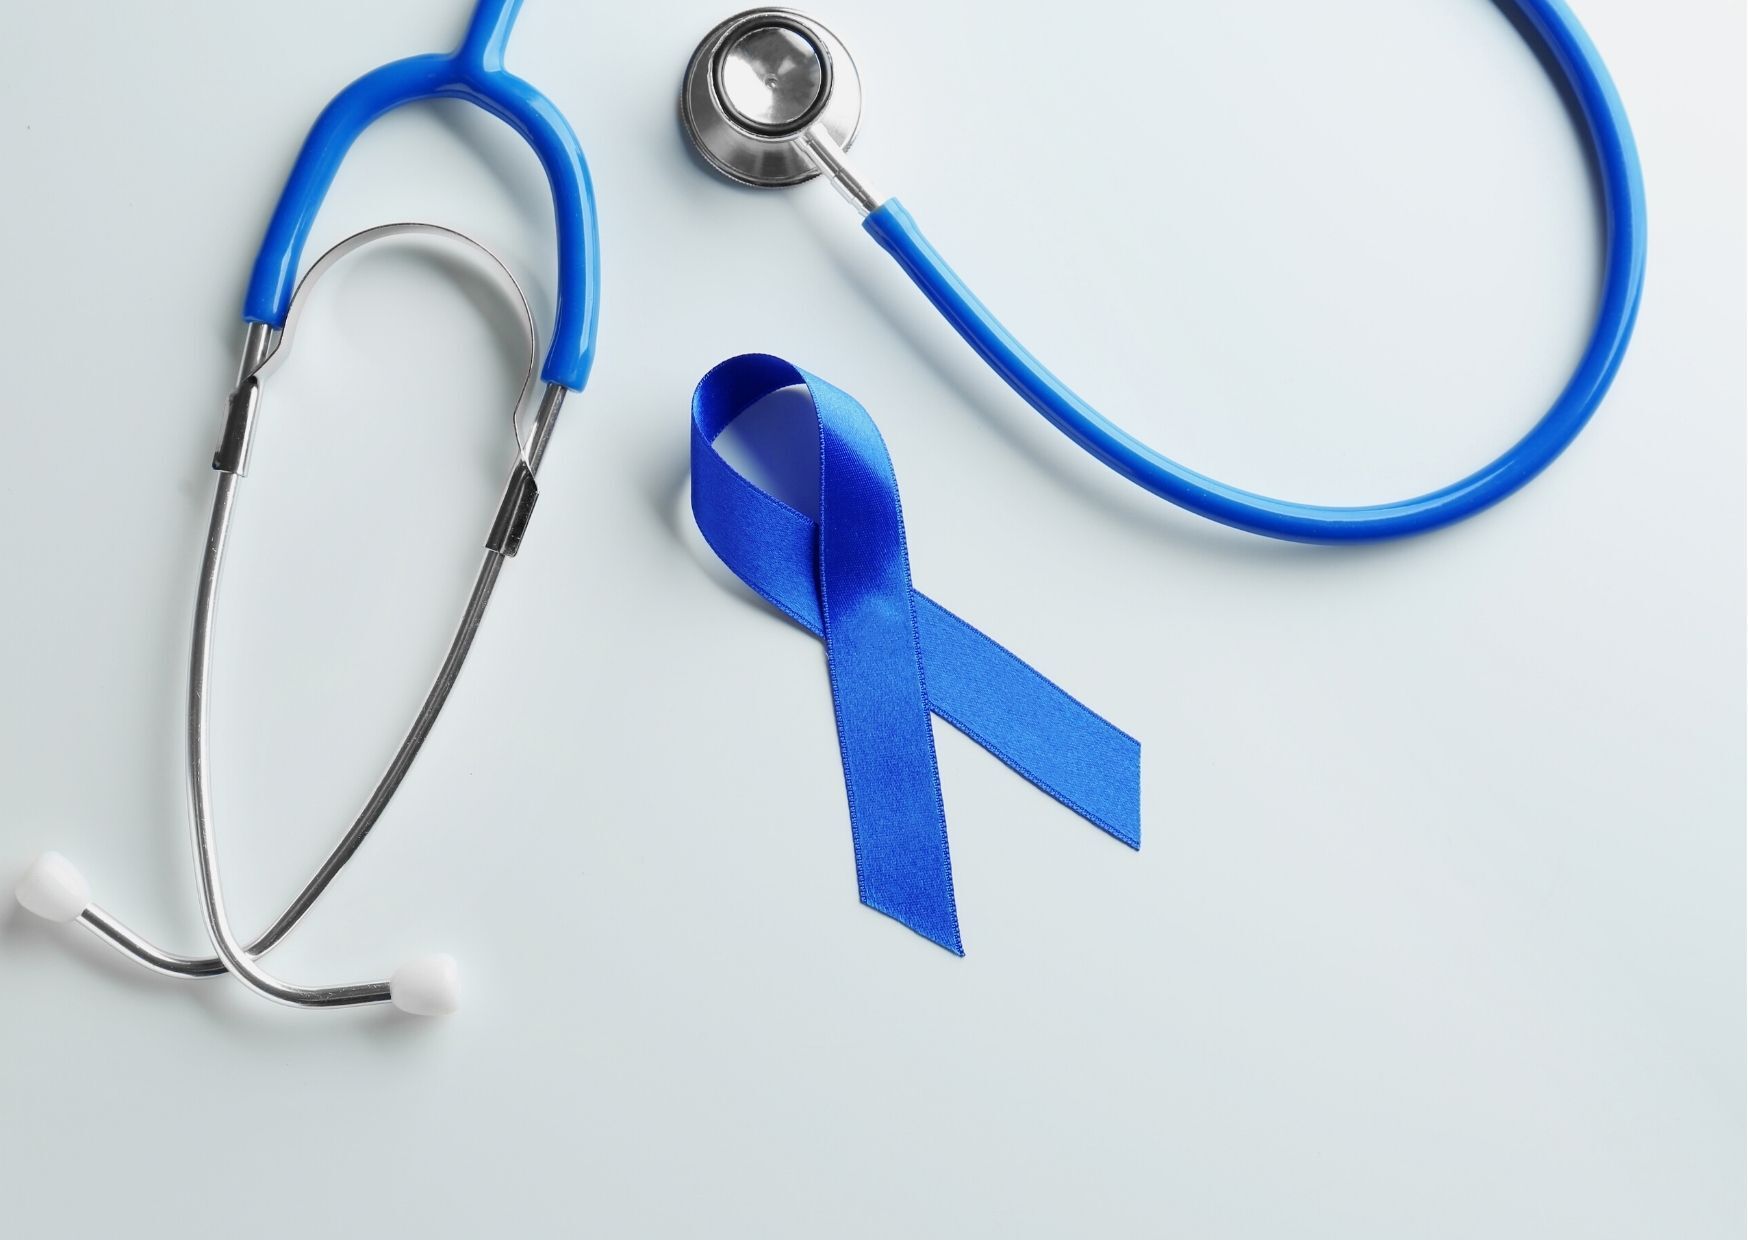 Colorectal Cancer Awareness Ribbon